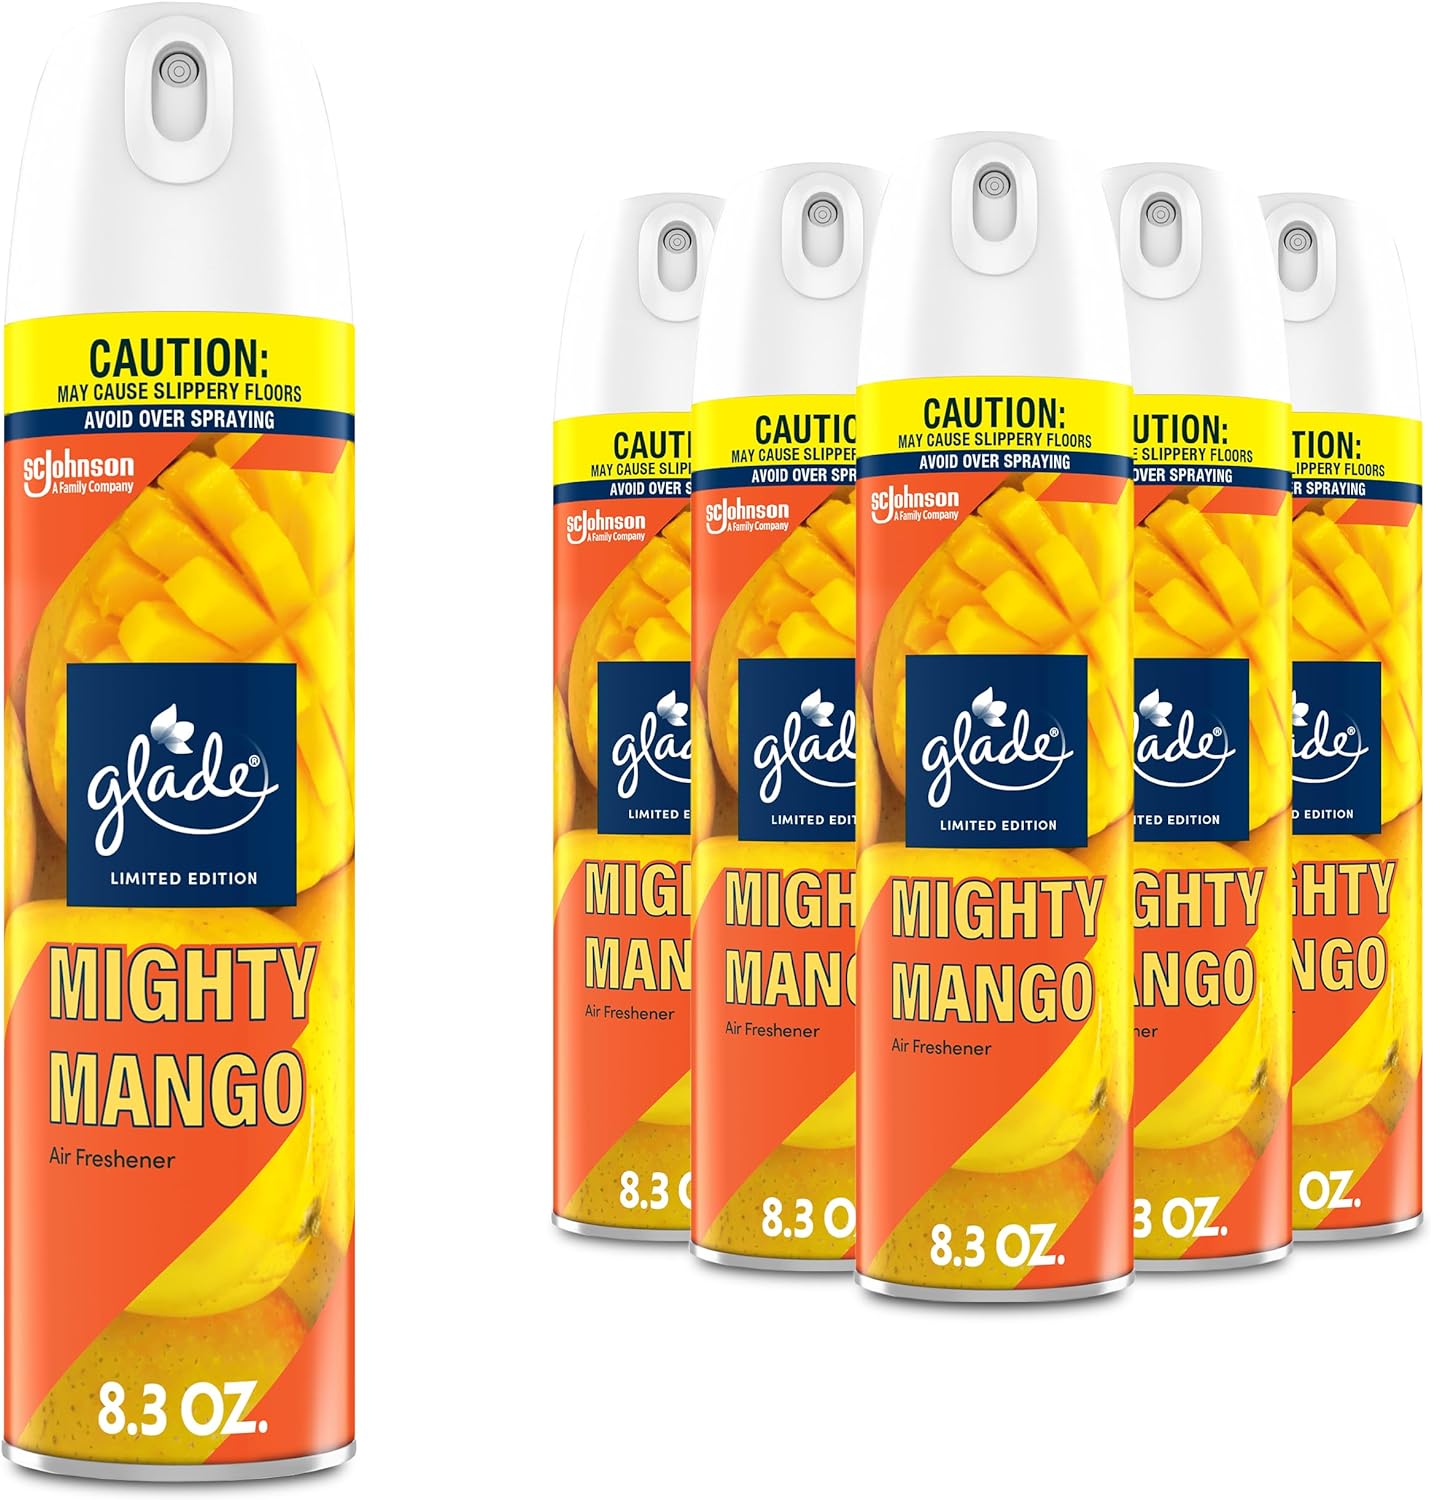 Glade Air Freshener Room Spray, Mighty Mango, 8.3 oz, 6 Count